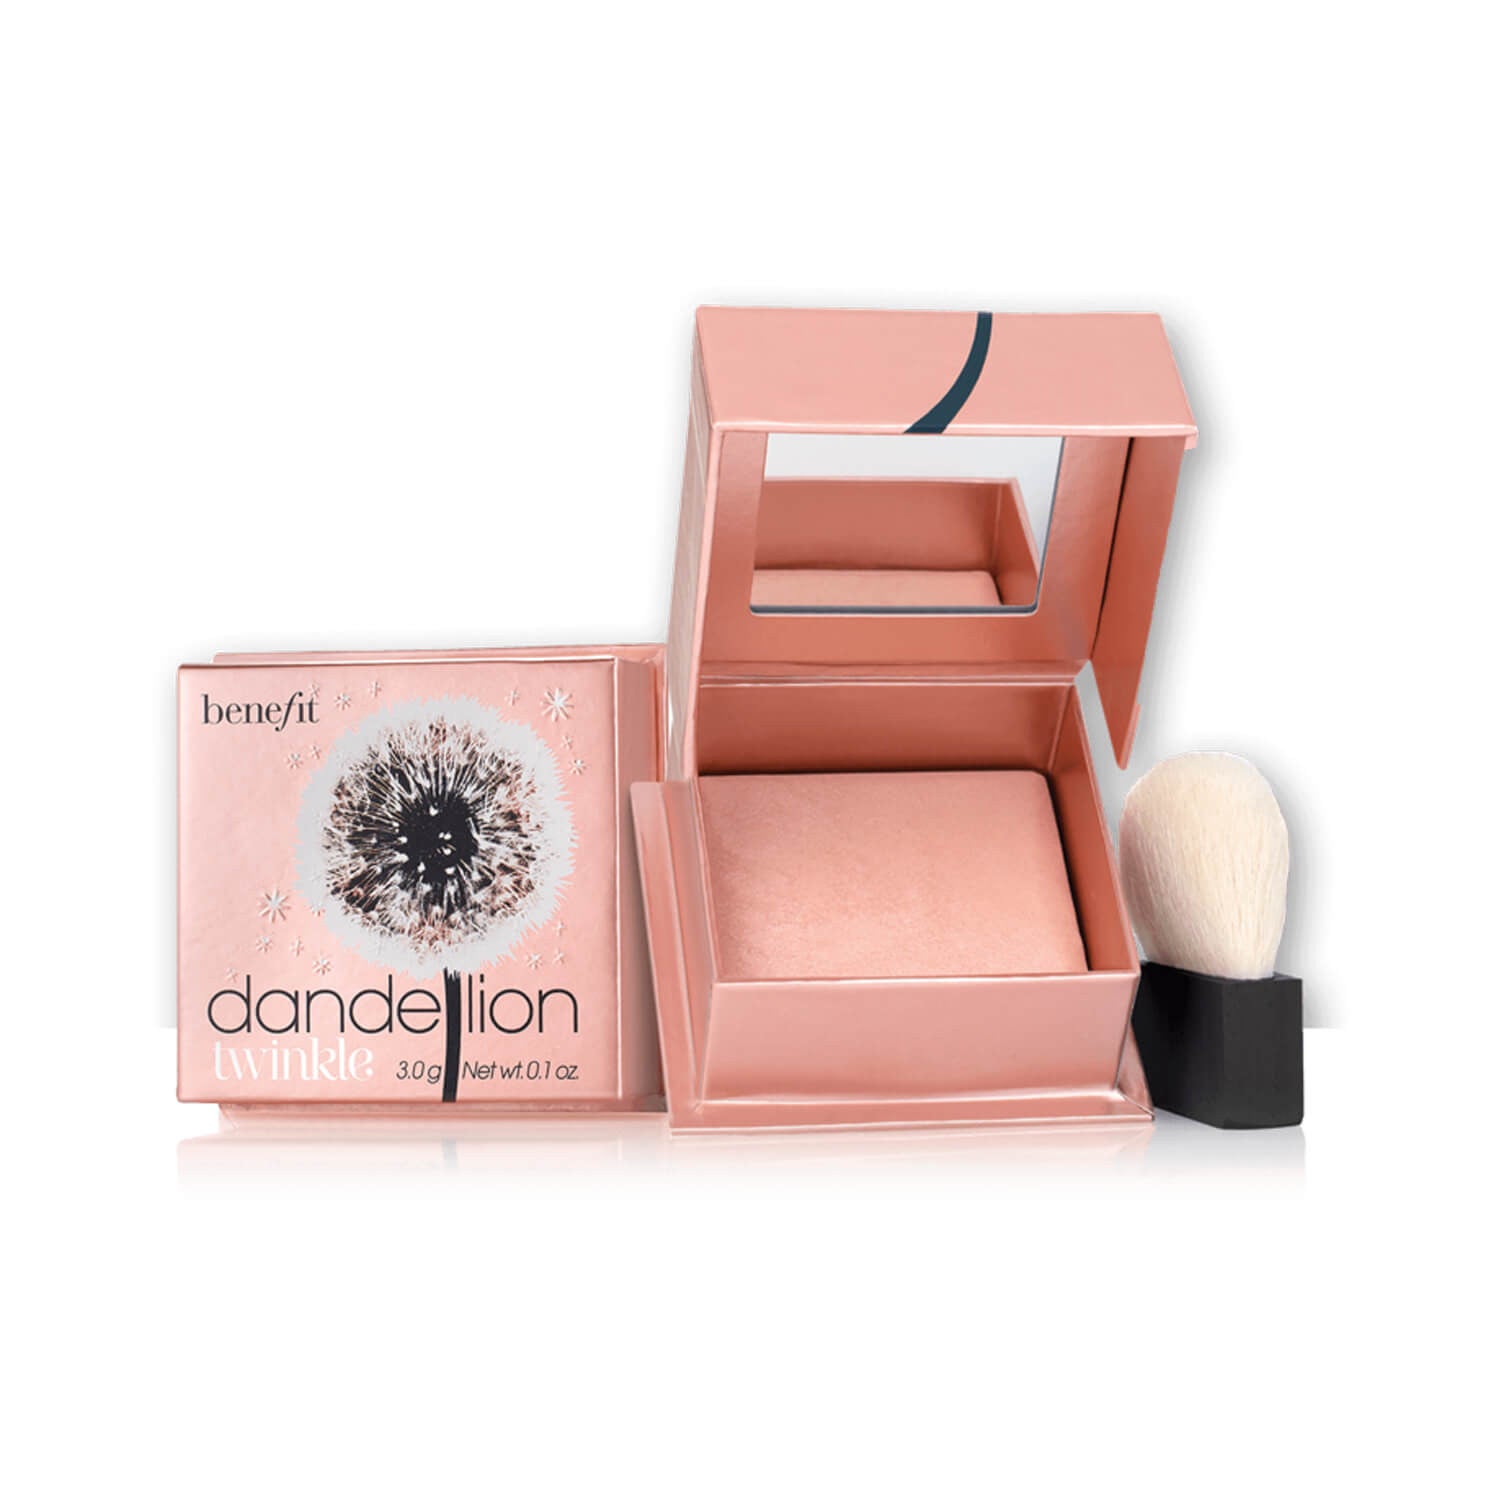 Benefit Cosmetics Dandelion Twinkle Powder Highlighter nude-pink powder highlighter & luminiser